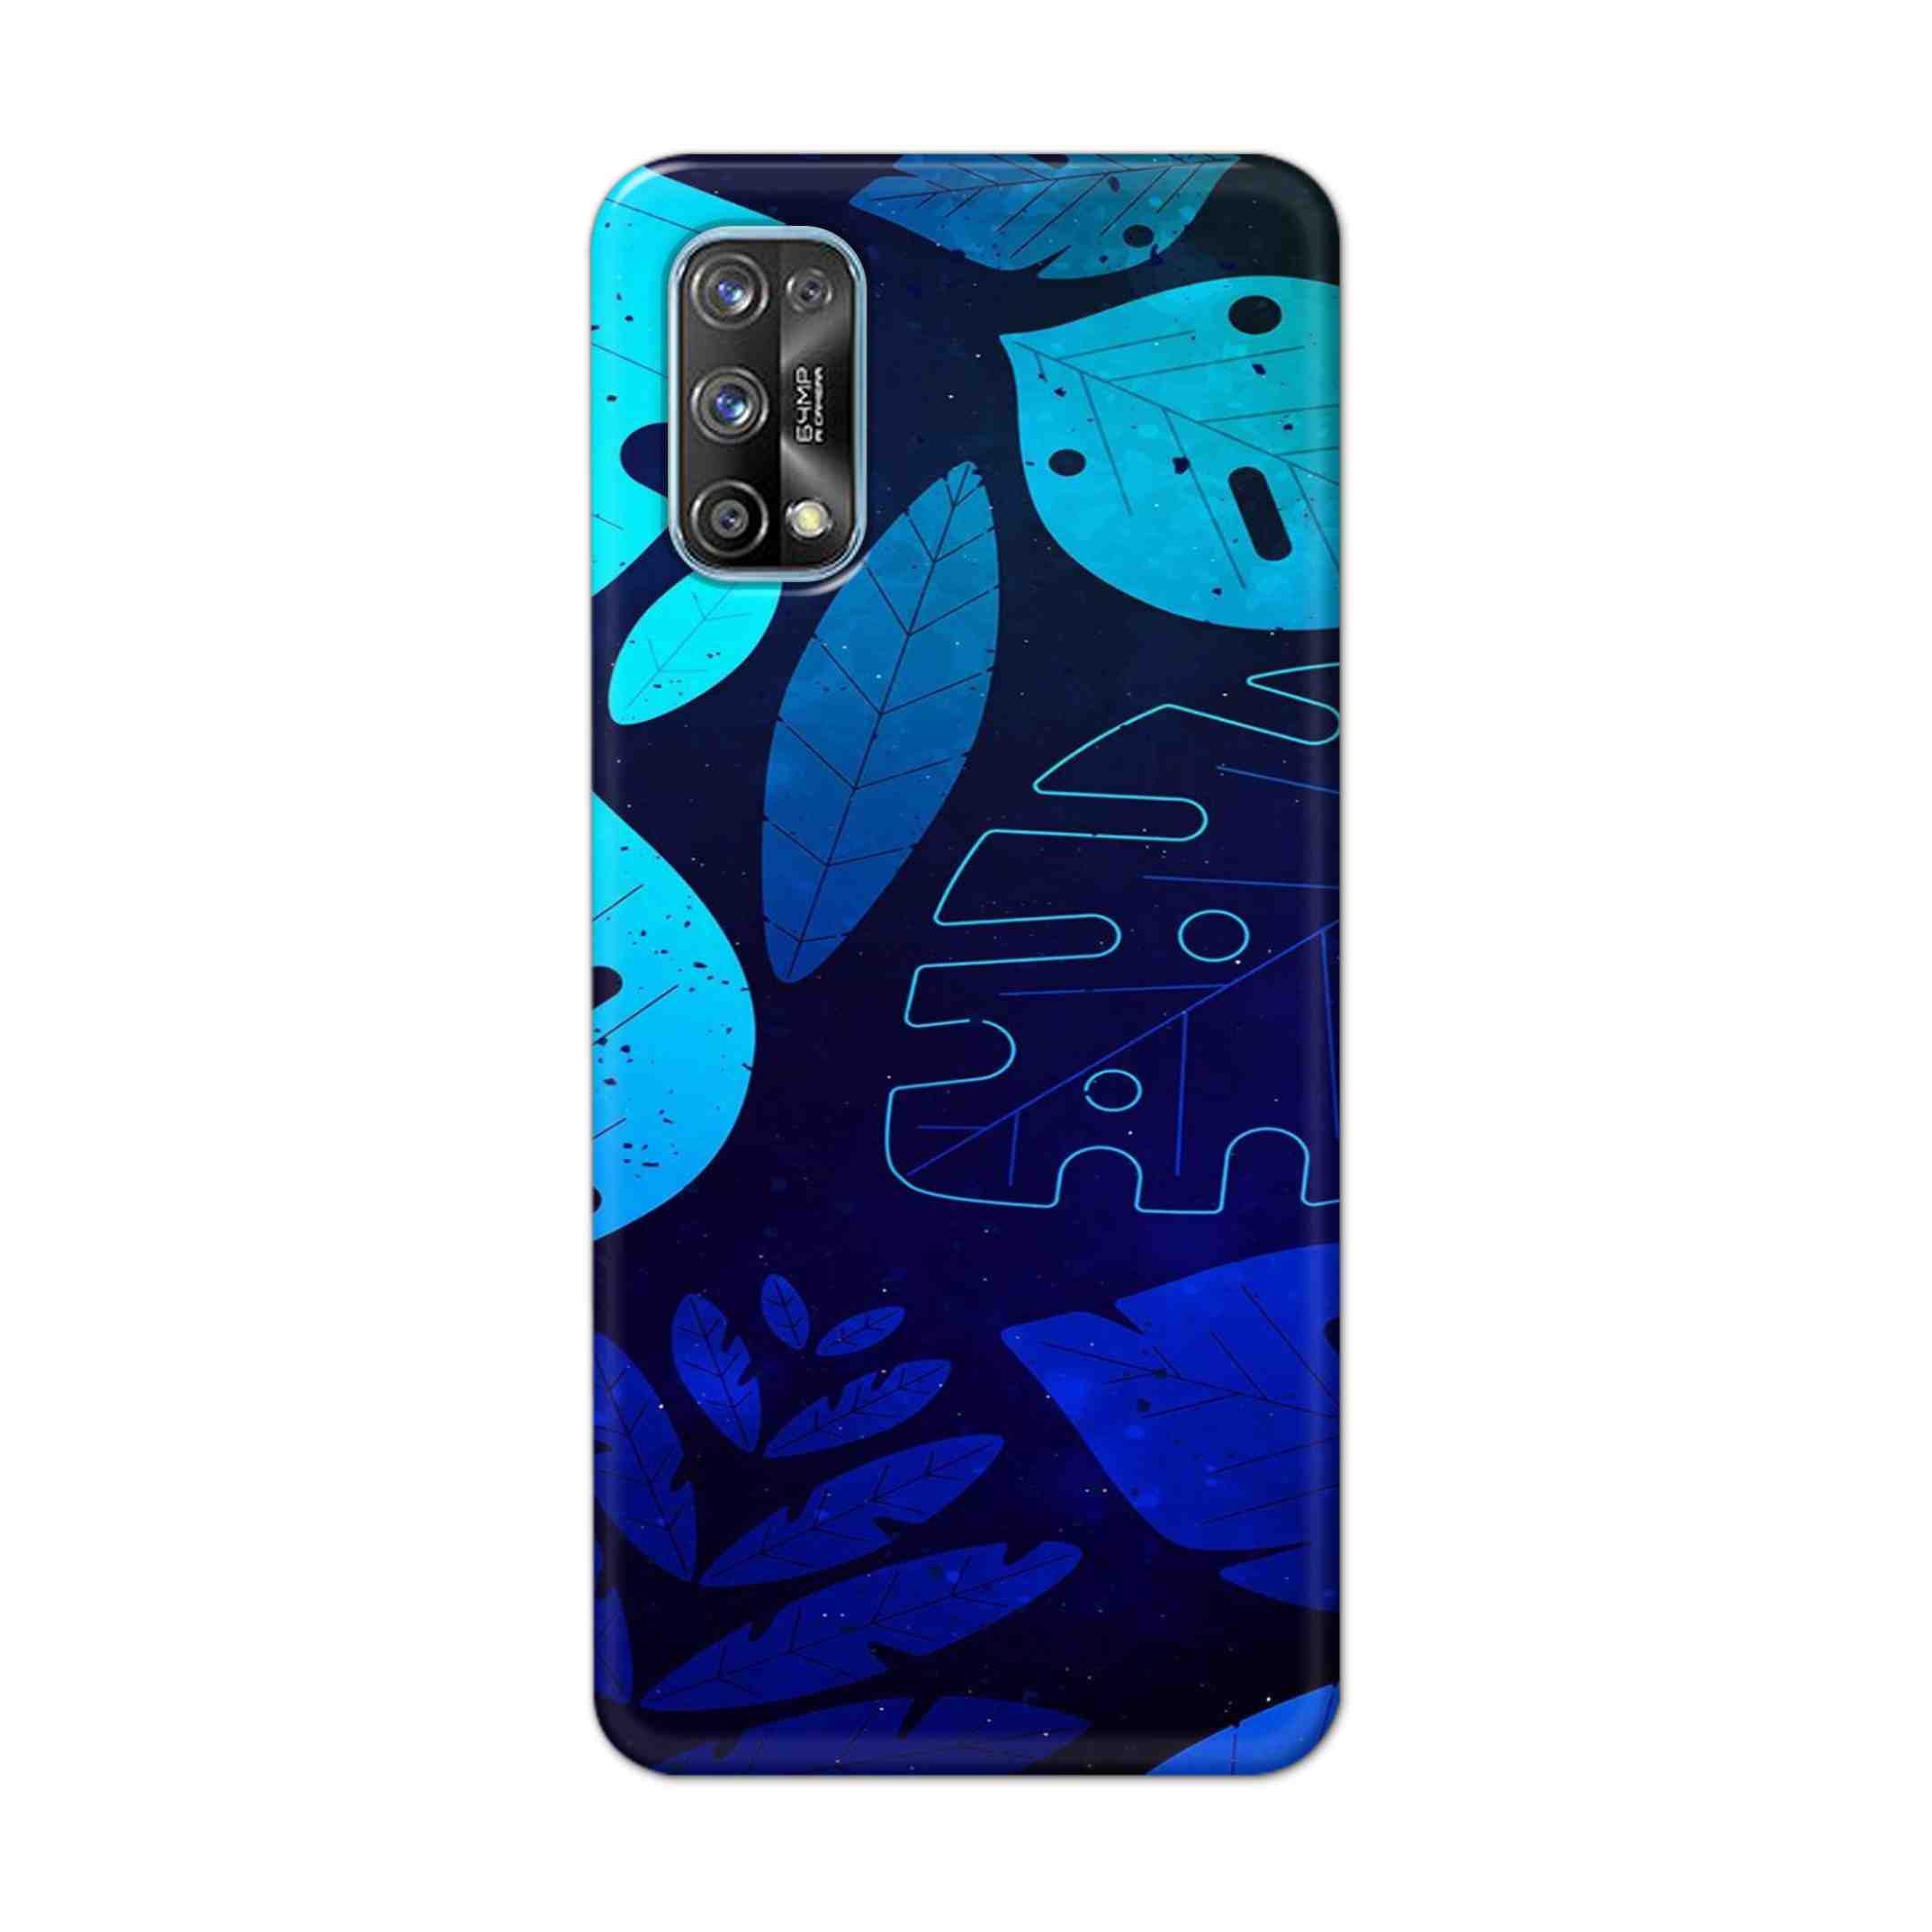 Buy Neon Leaf Hard Back Mobile Phone Case Cover For Realme 7 Pro Online